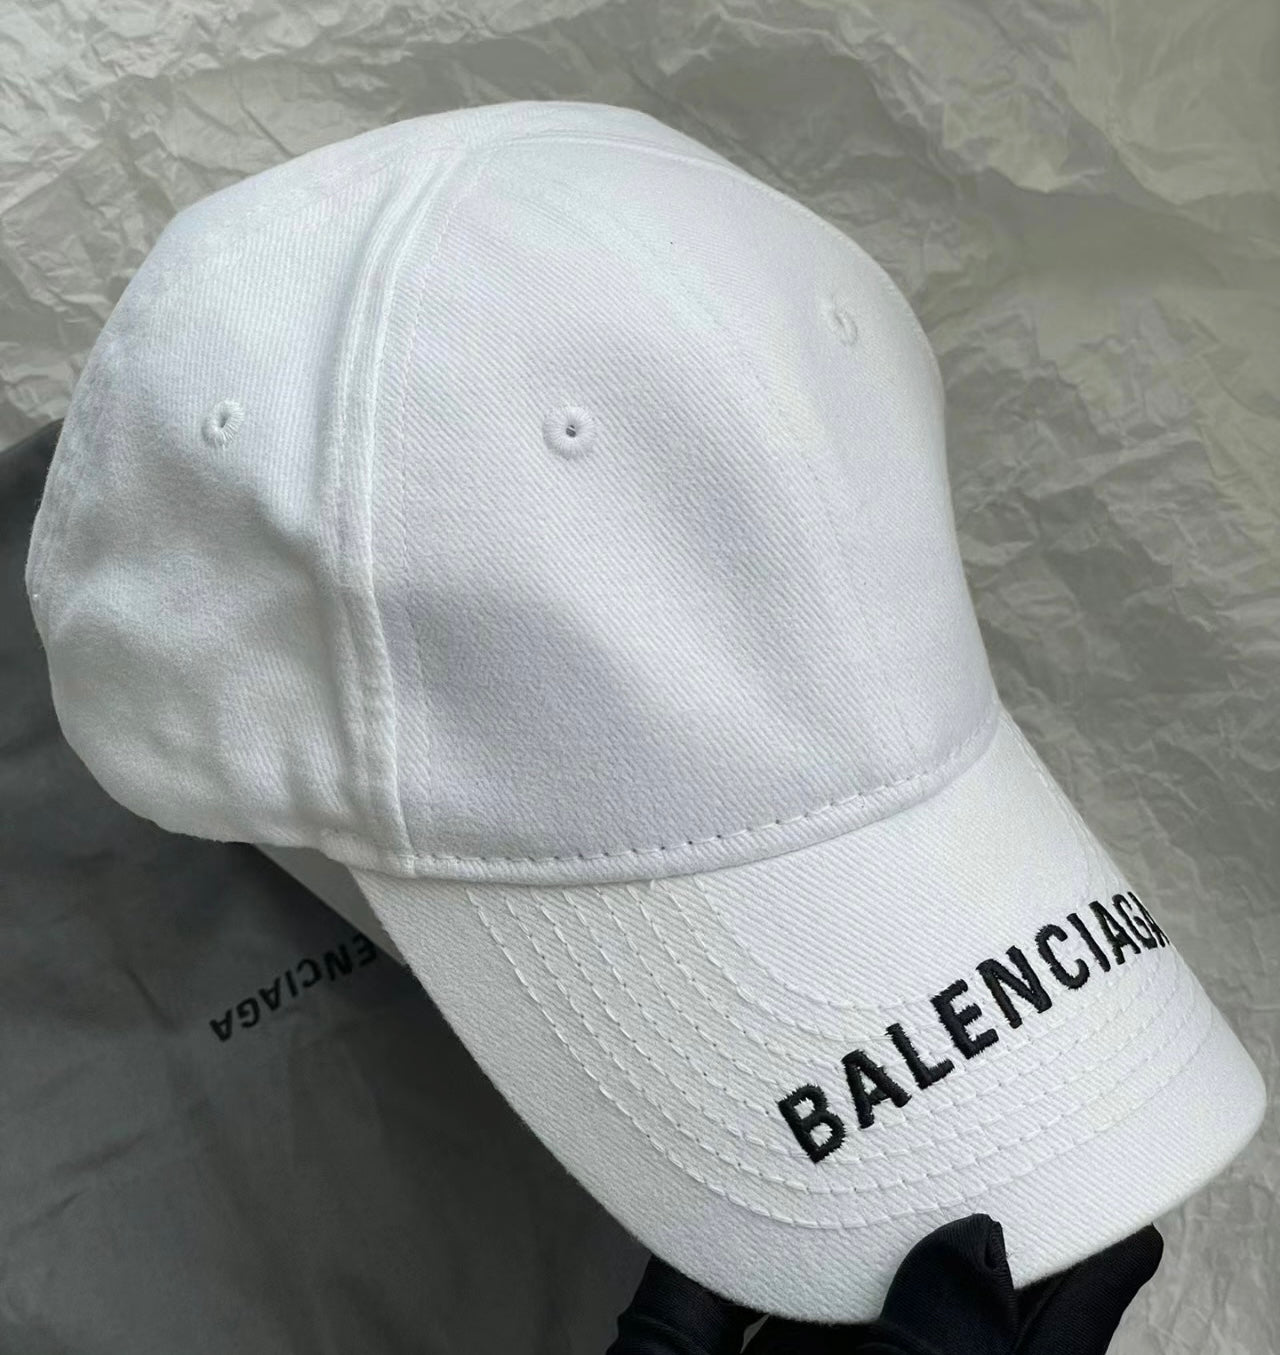 Balenciaga巴黎世家 CAP 經典棒球帽/340